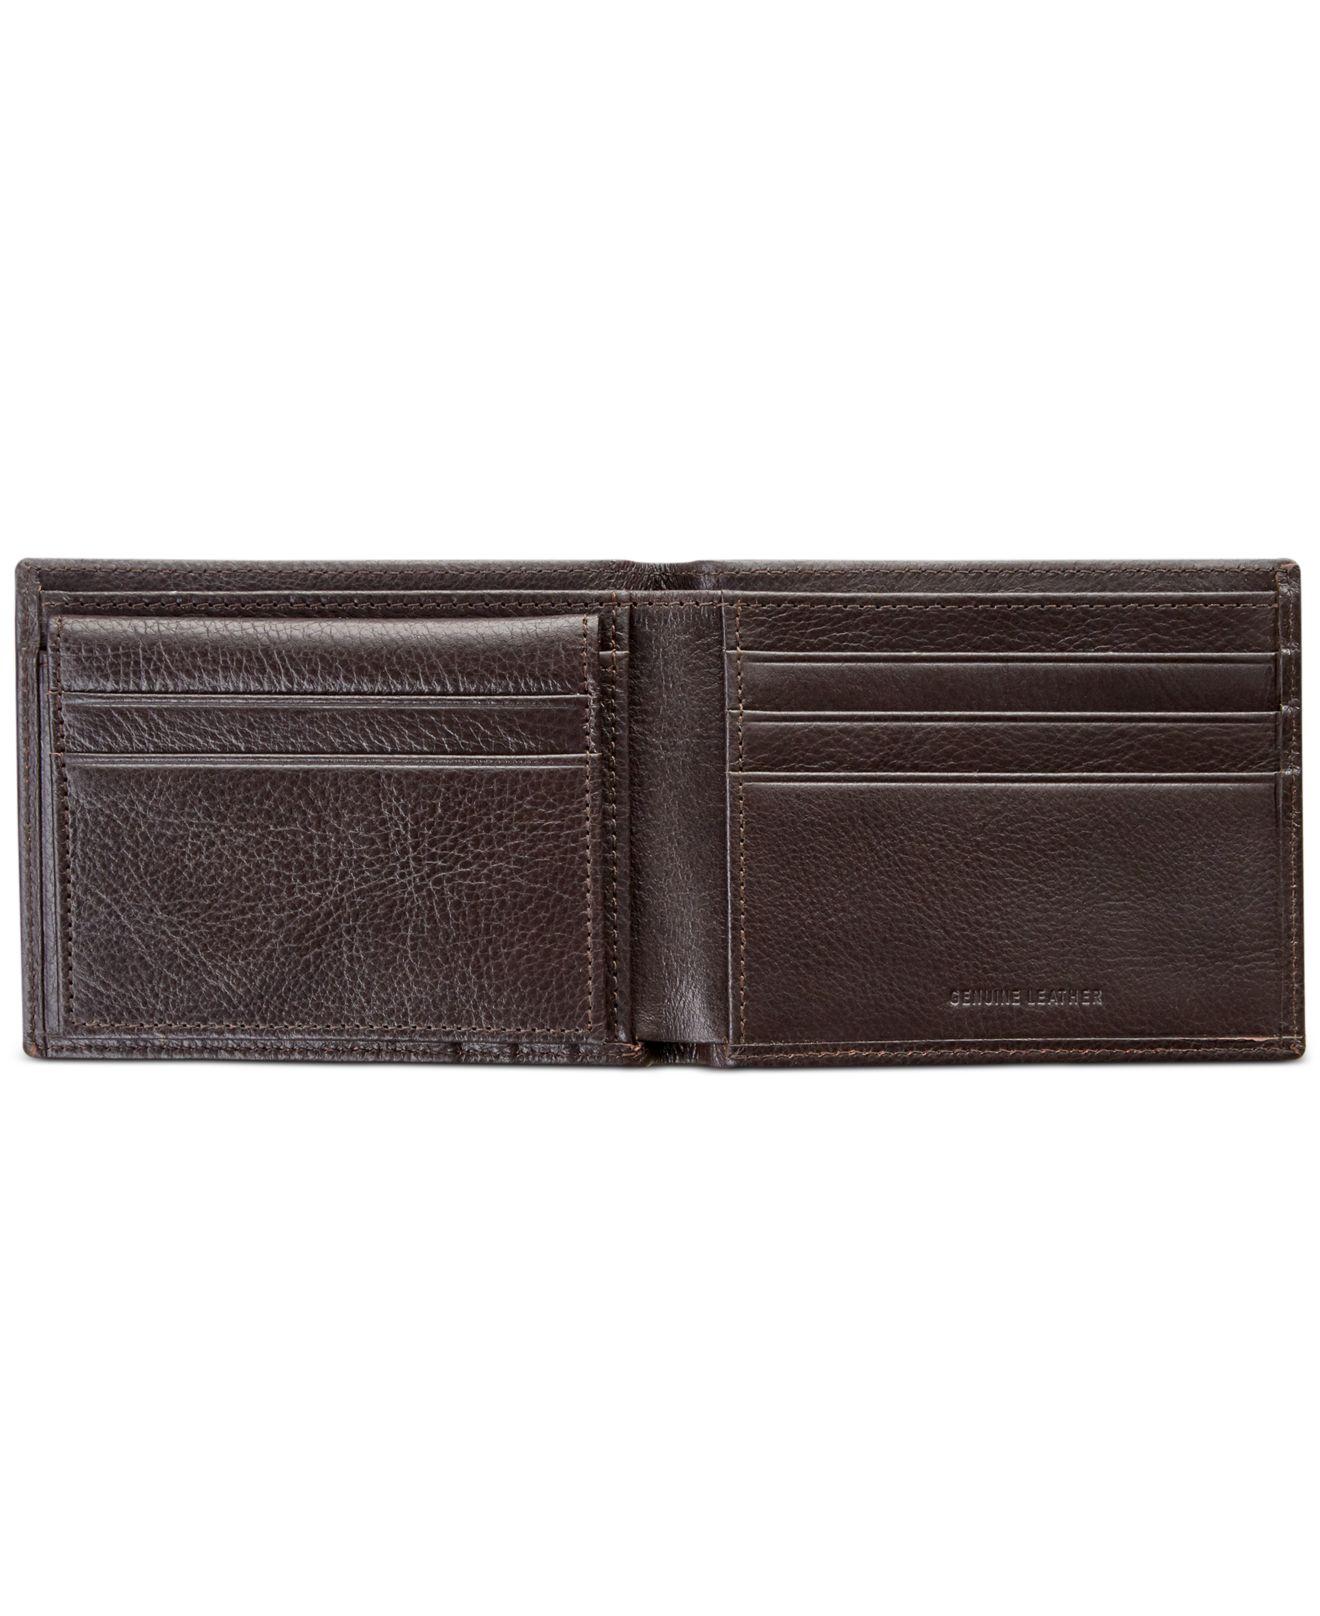 Perry Ellis Rfid Leather Wallet in Black for Men - Lyst